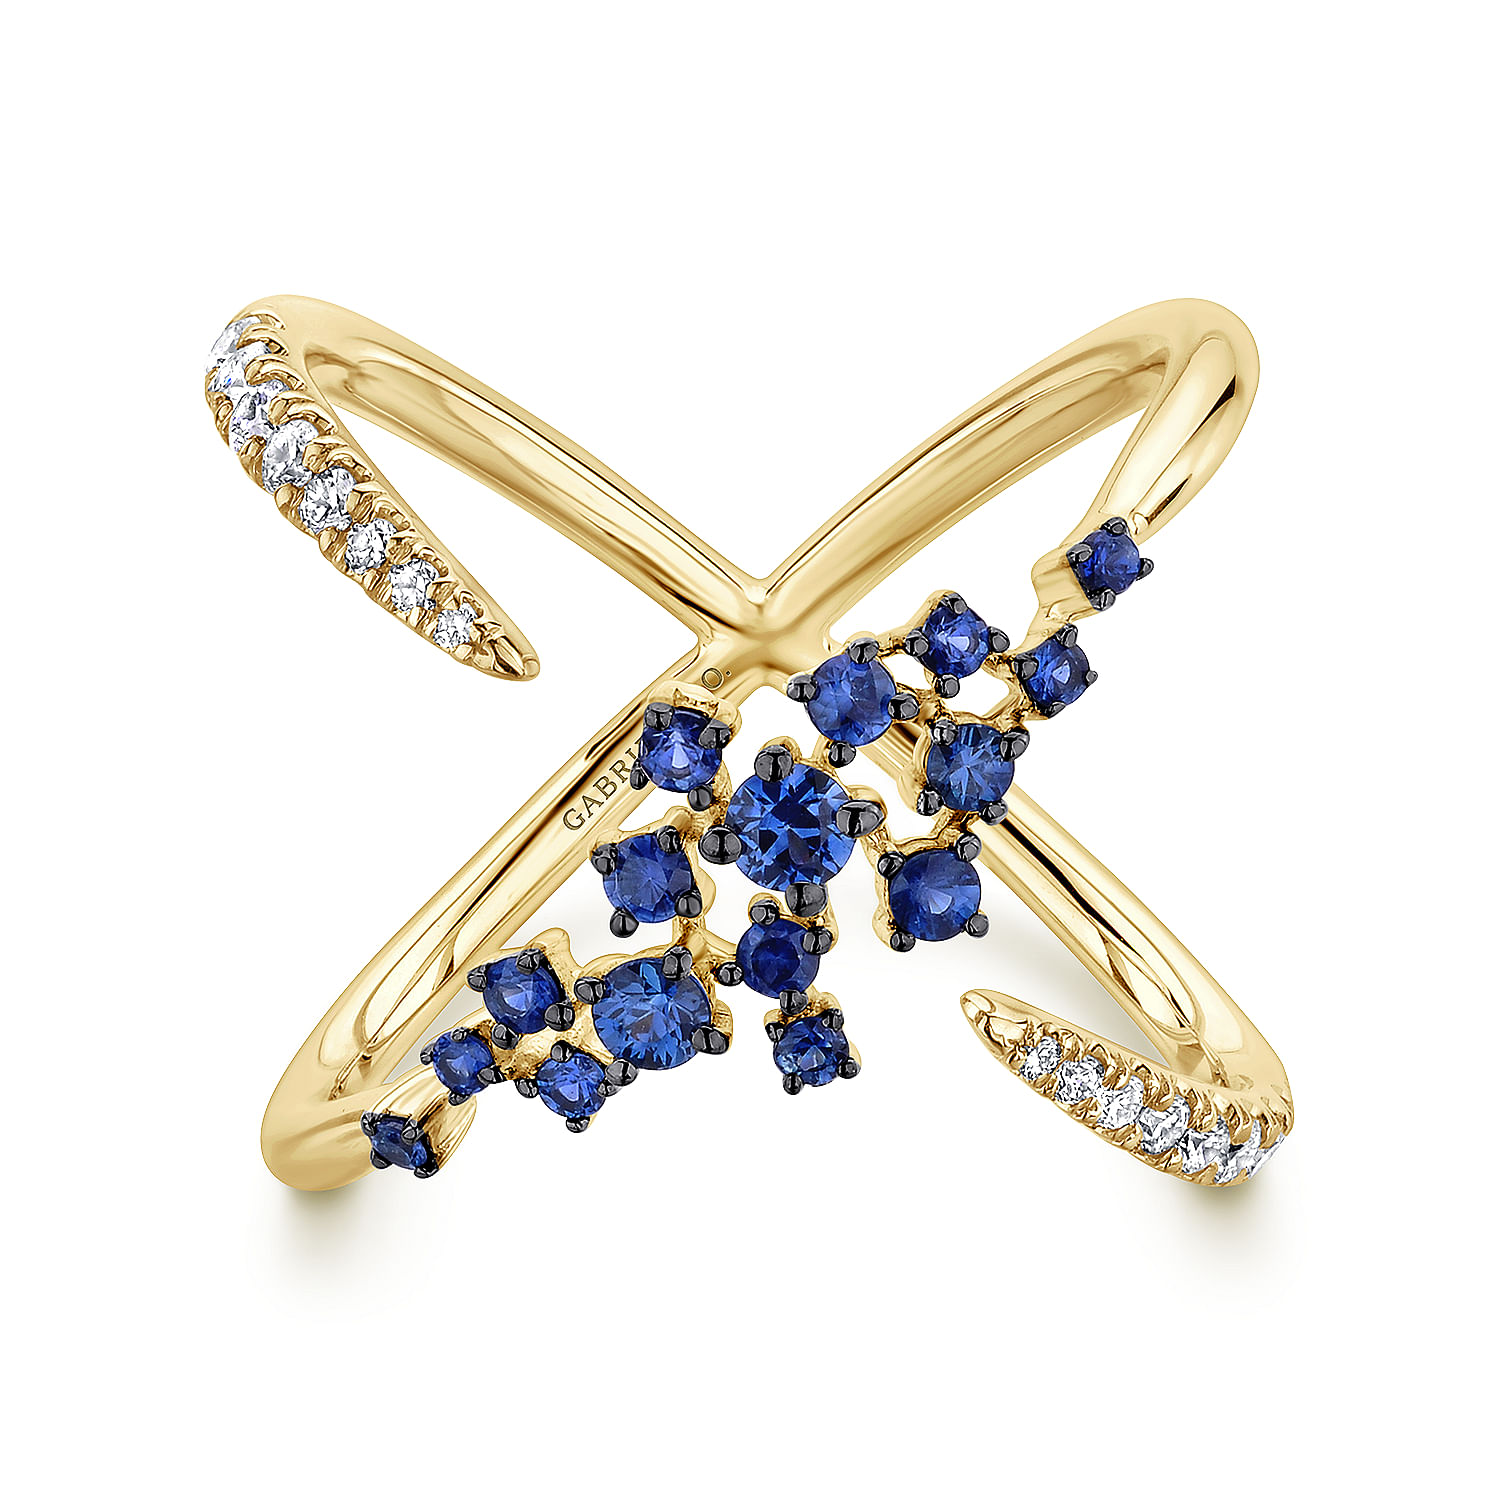 14K Yellow Gold Modern Scattered Sapphire & Diamond Ring